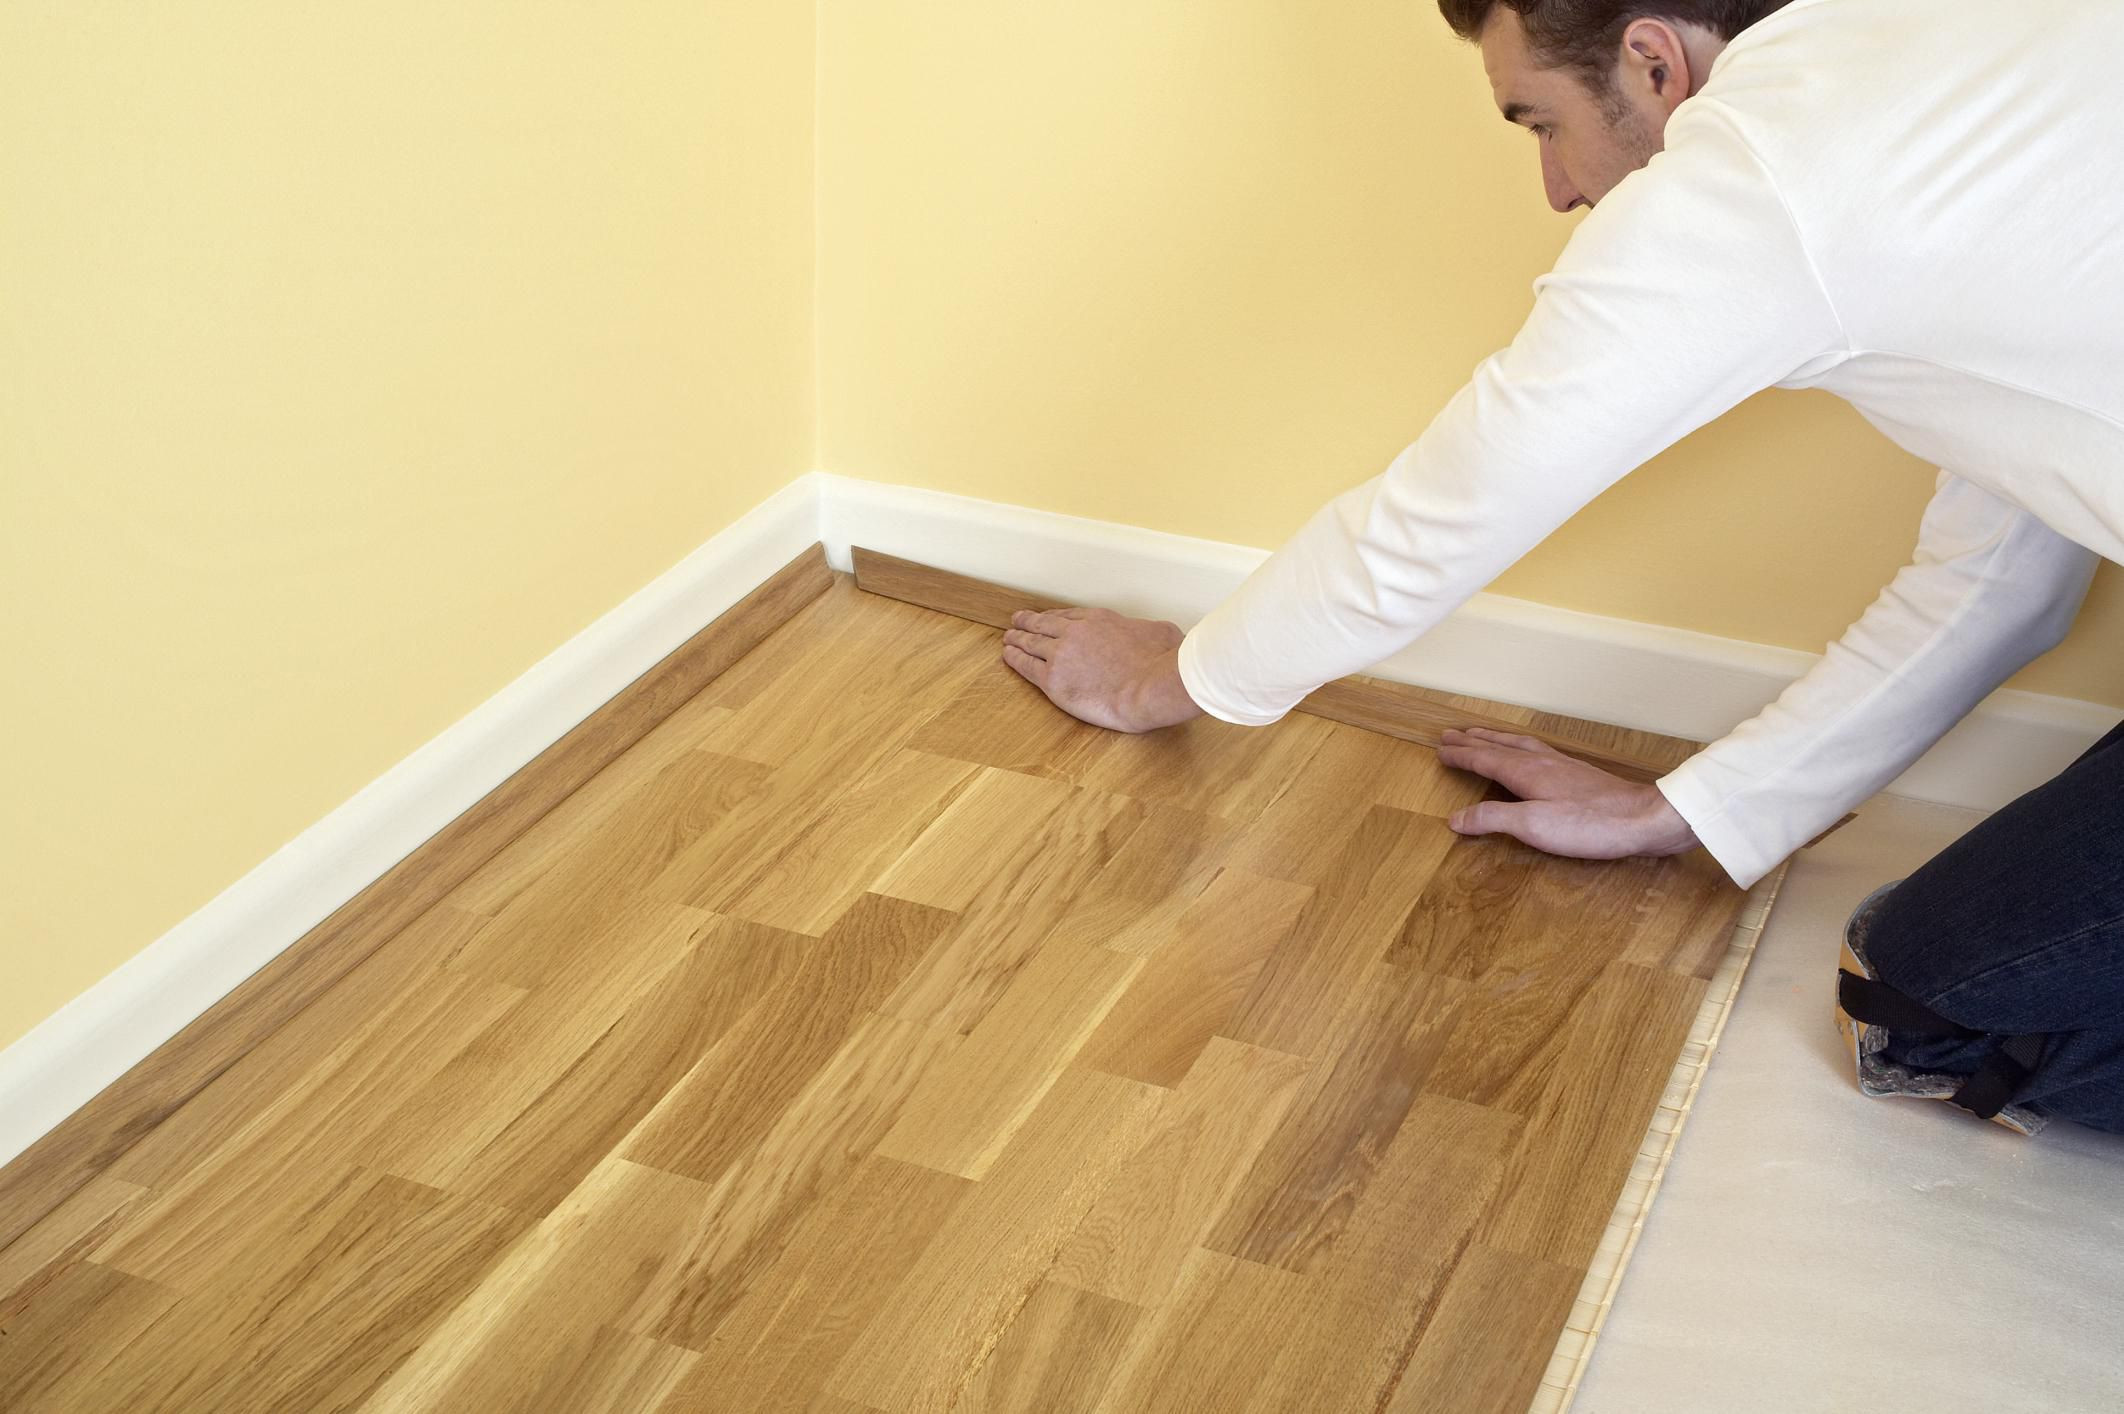 13 Lovable Hardwood Flooring Vs Laminate Flooring Cost 2022 free download hardwood flooring vs laminate flooring cost of basics of 12 mm laminate flooring inside 80033008 56a49f155f9b58b7d0d7e0be